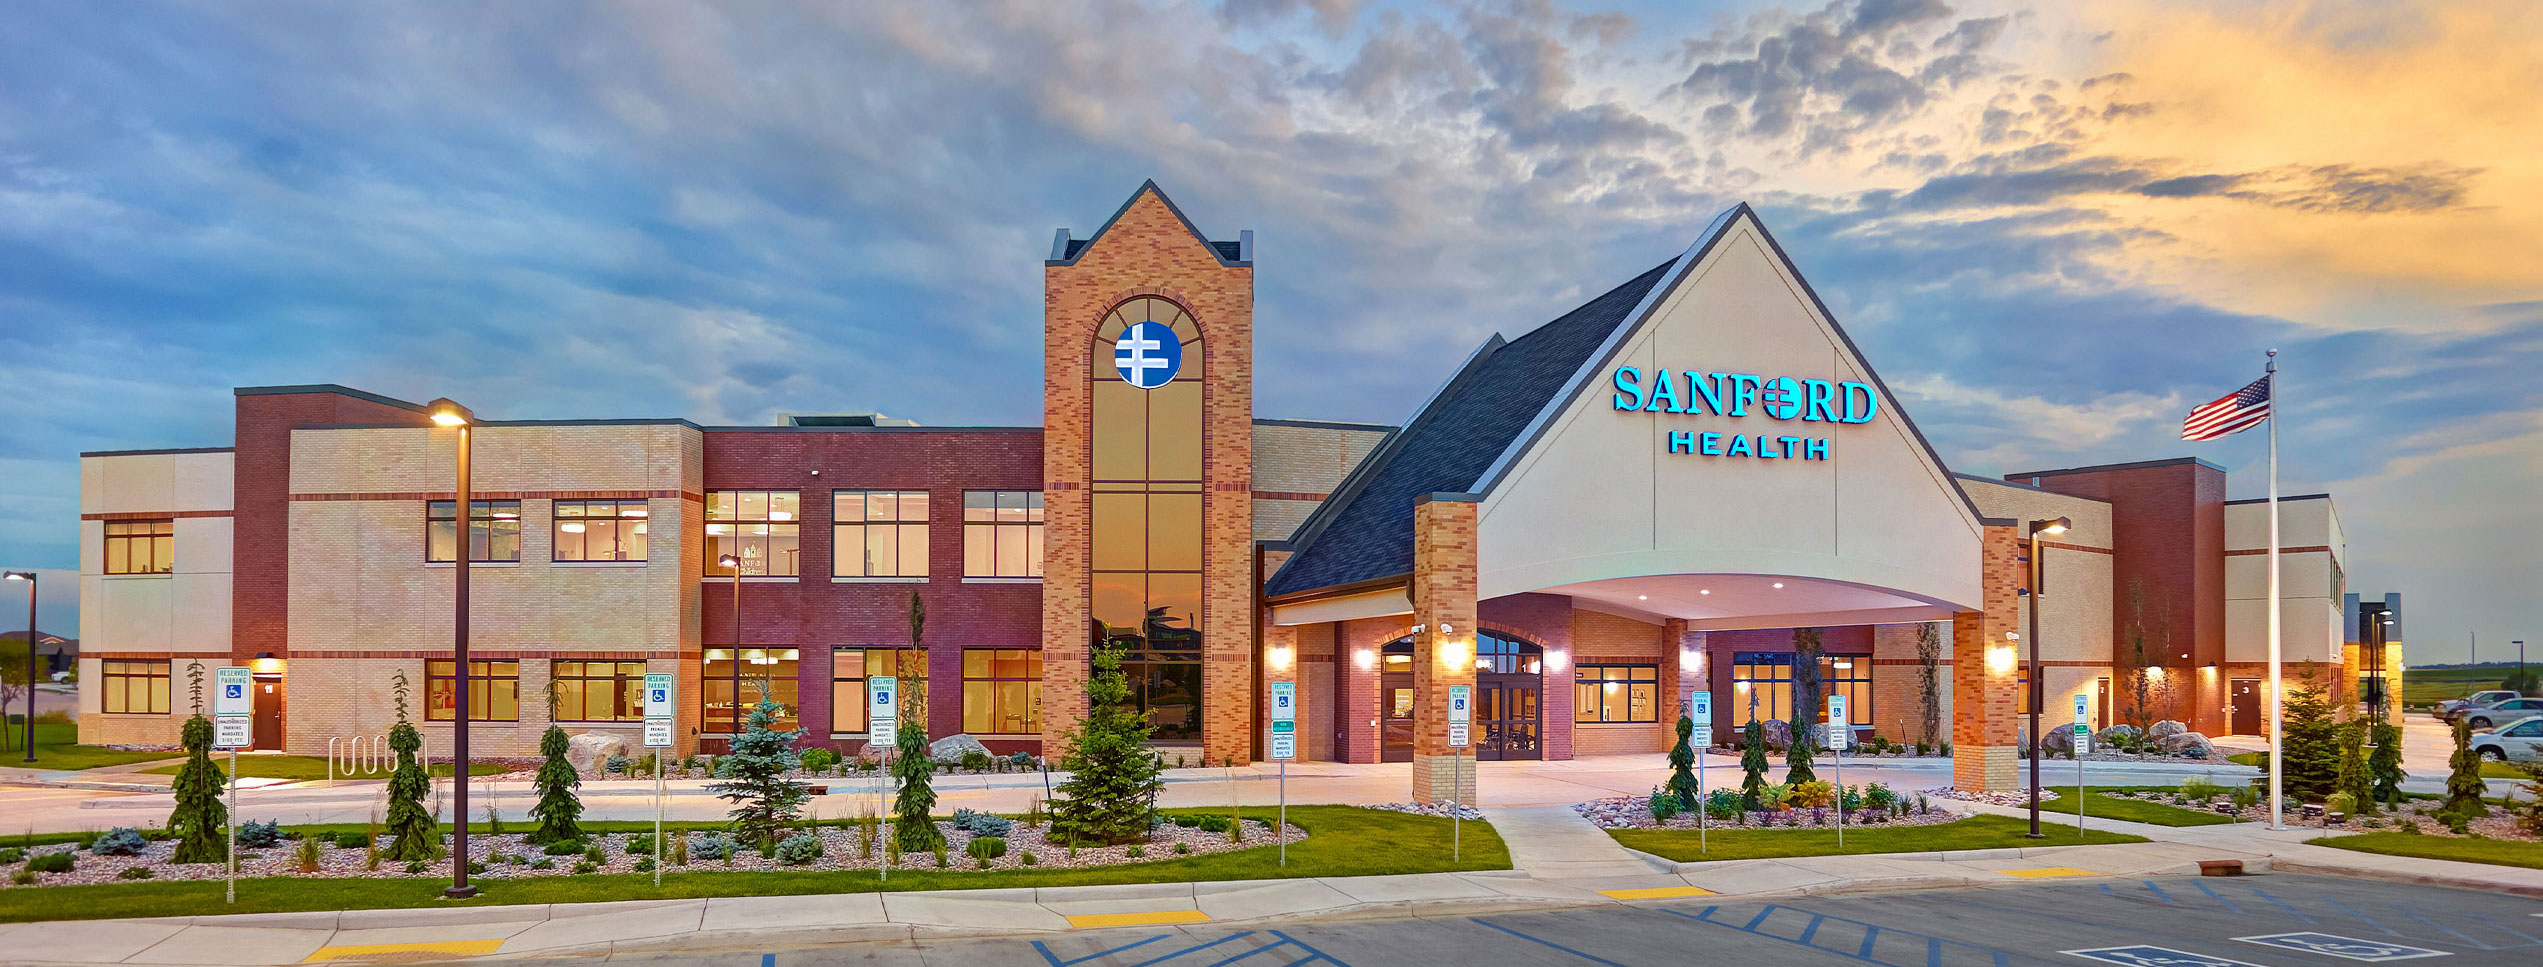 Sanford Medical center Construction 